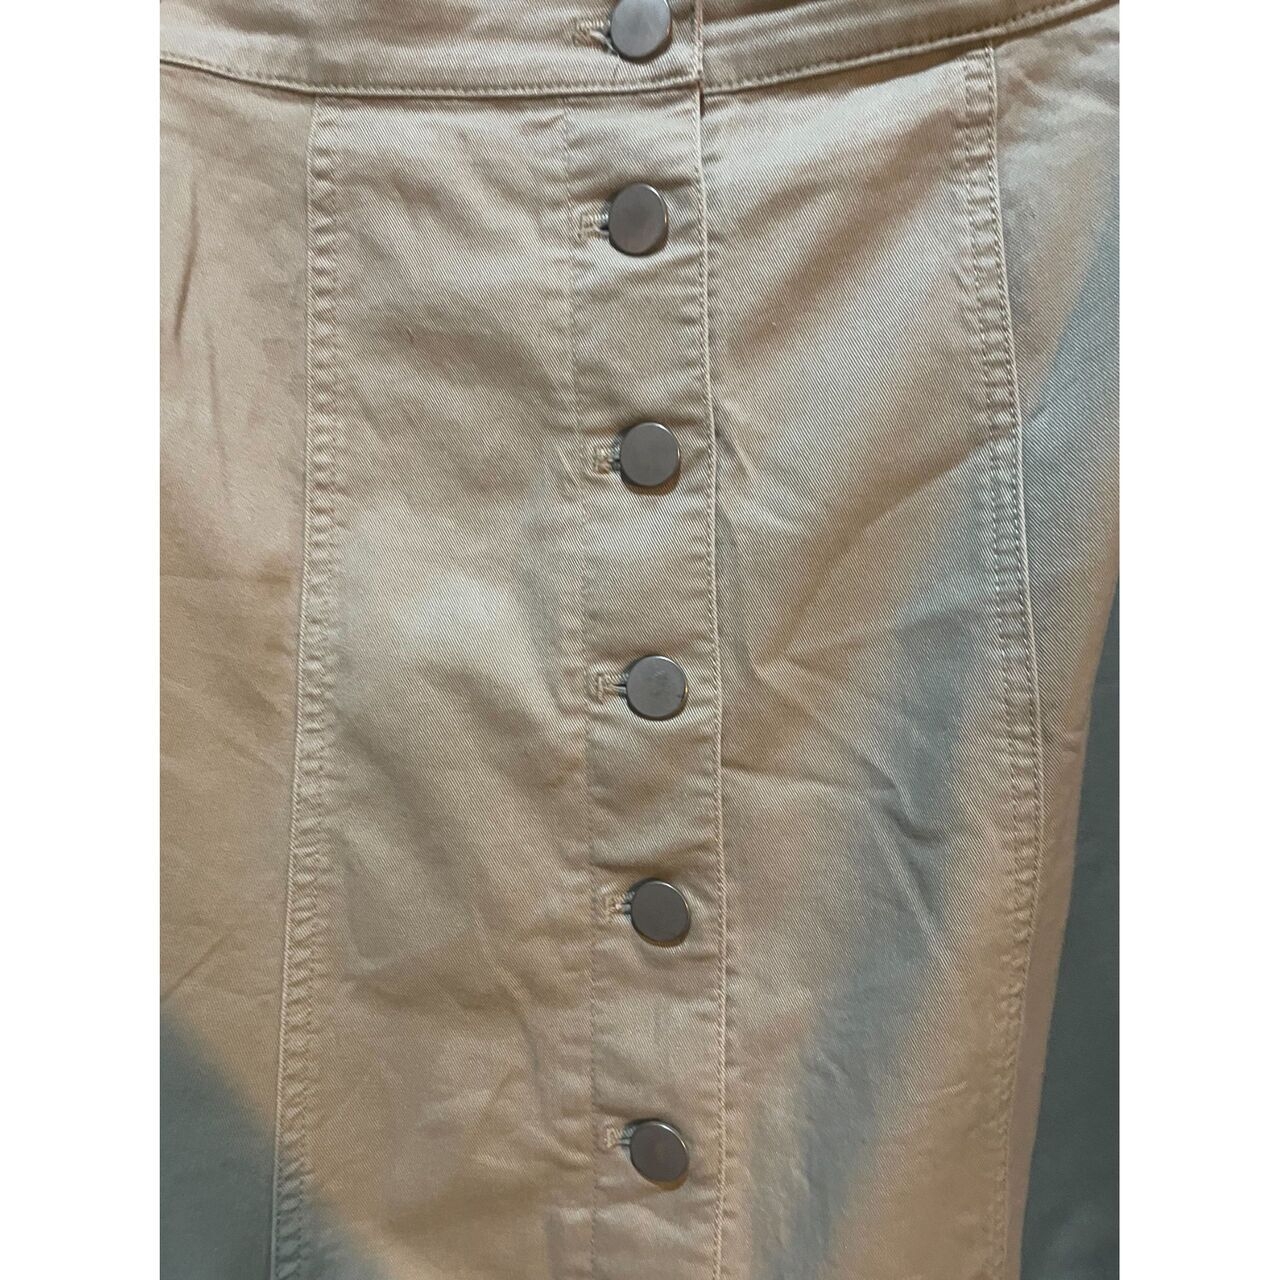 UNIQLO Light Brown Midi Skirt